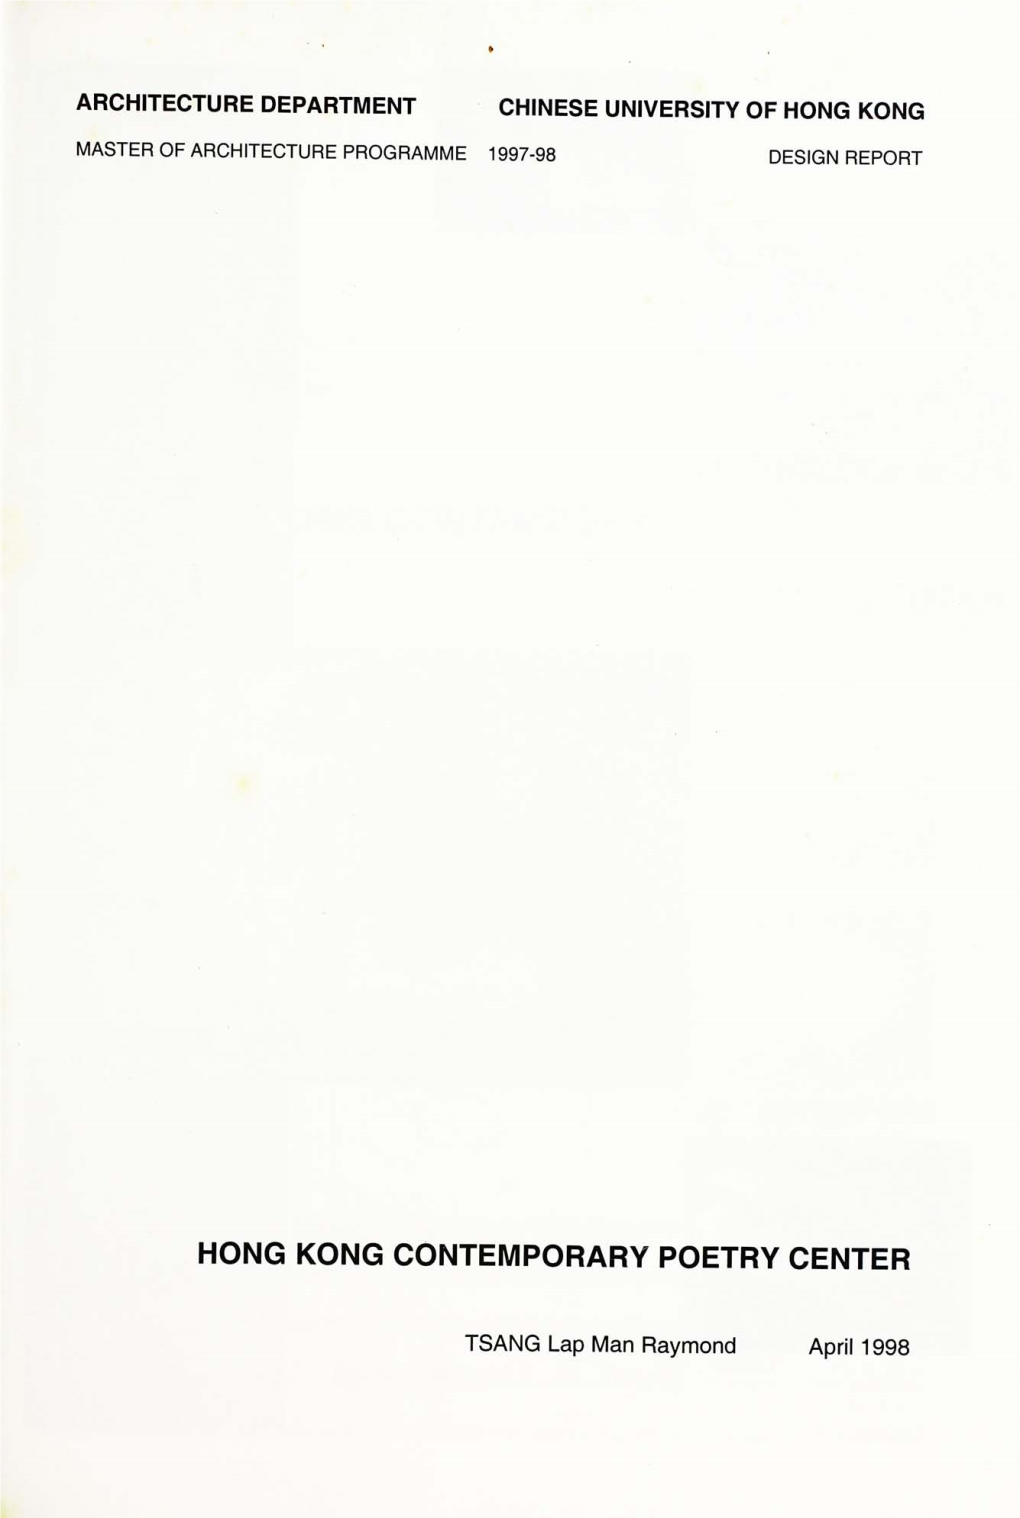 Hong Kong Contemporary Poetry Center